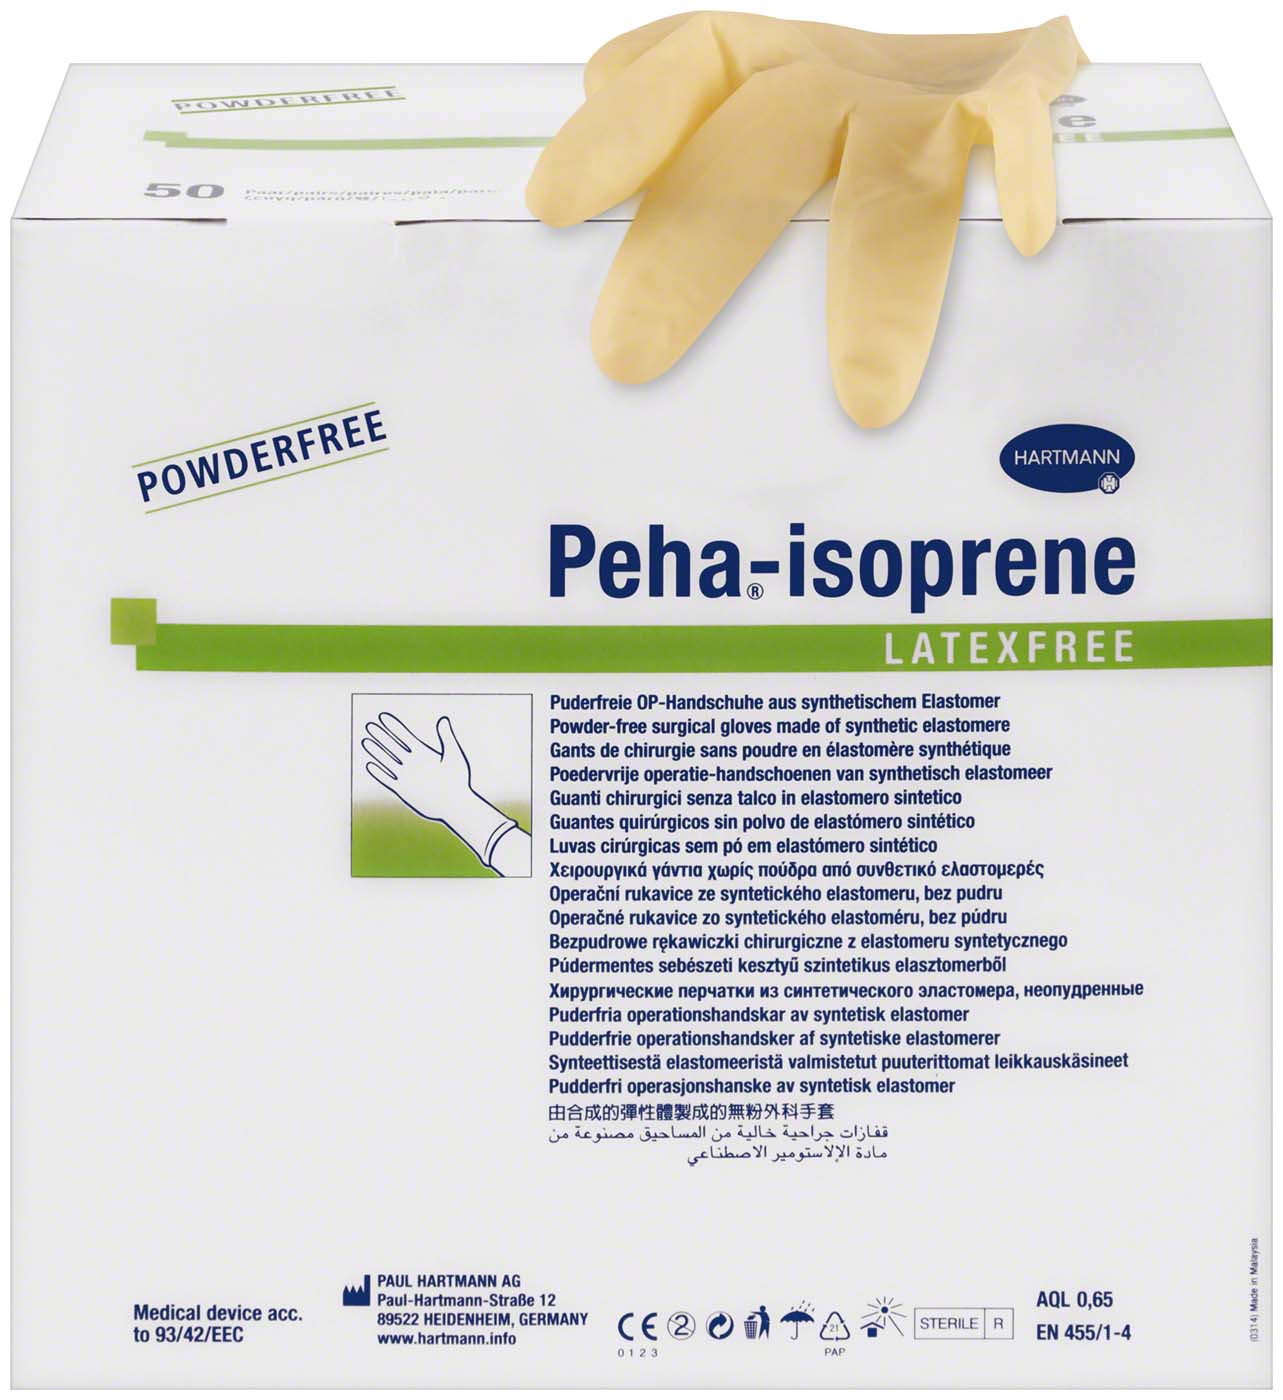 Peha®-isoprene LATEXFREE HARTMANN